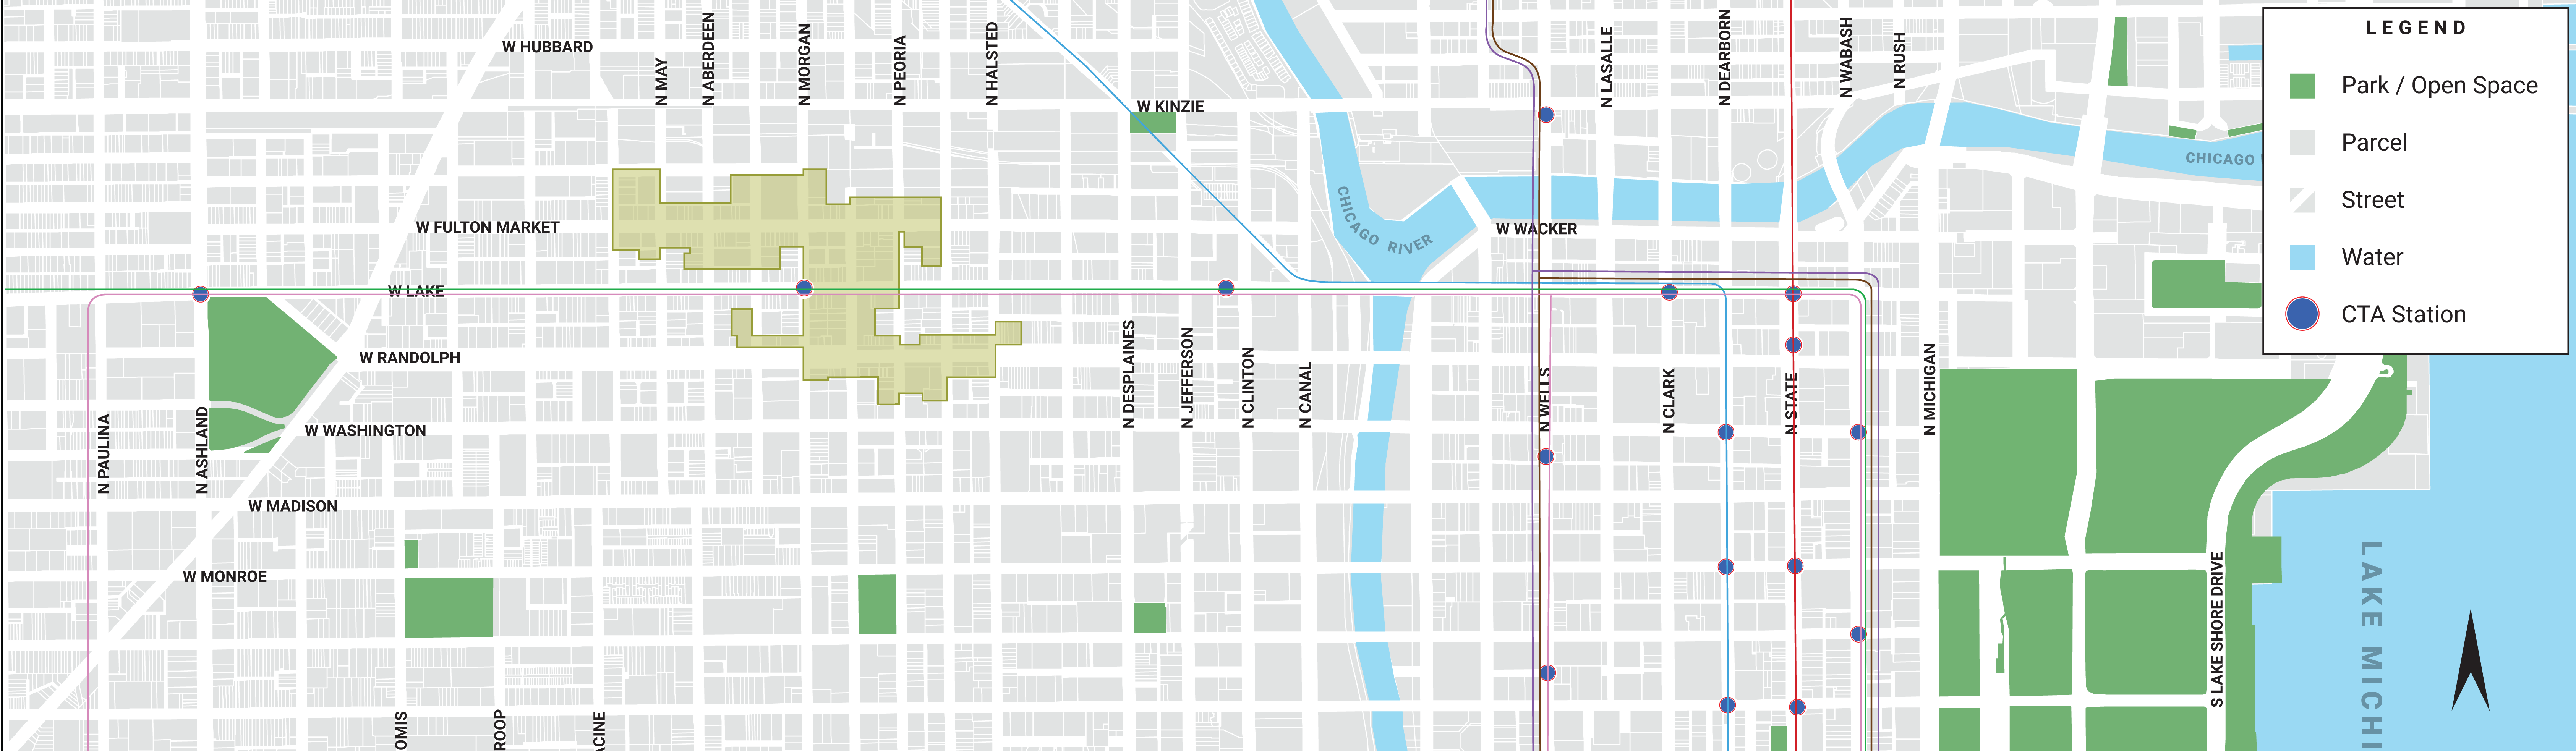 Landmarks Map